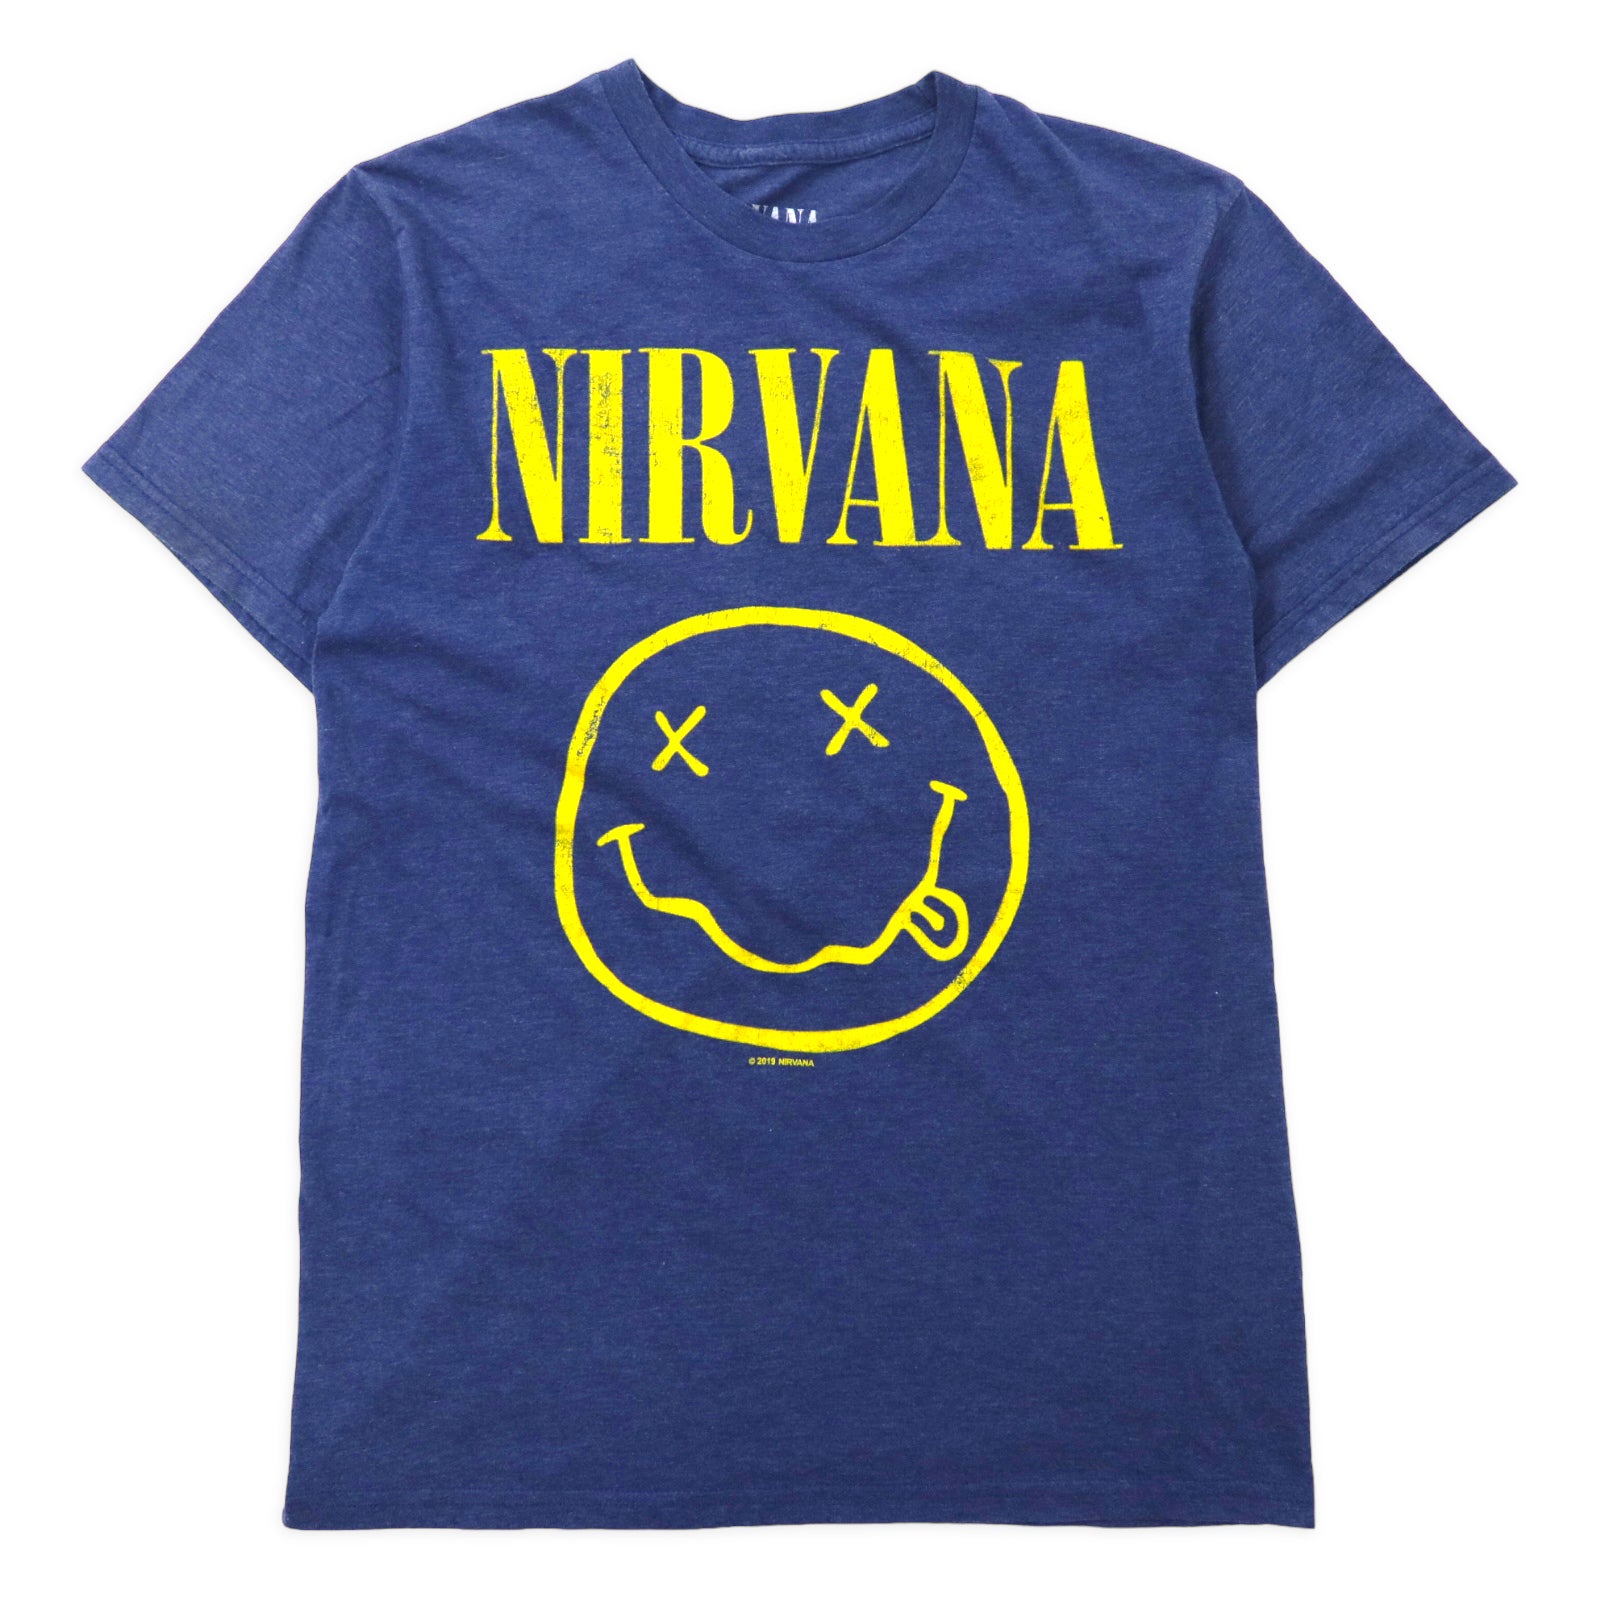 NIRVANA Nirvana Band T-SHIRT M Navy Cotton Smiley Mexico Made 